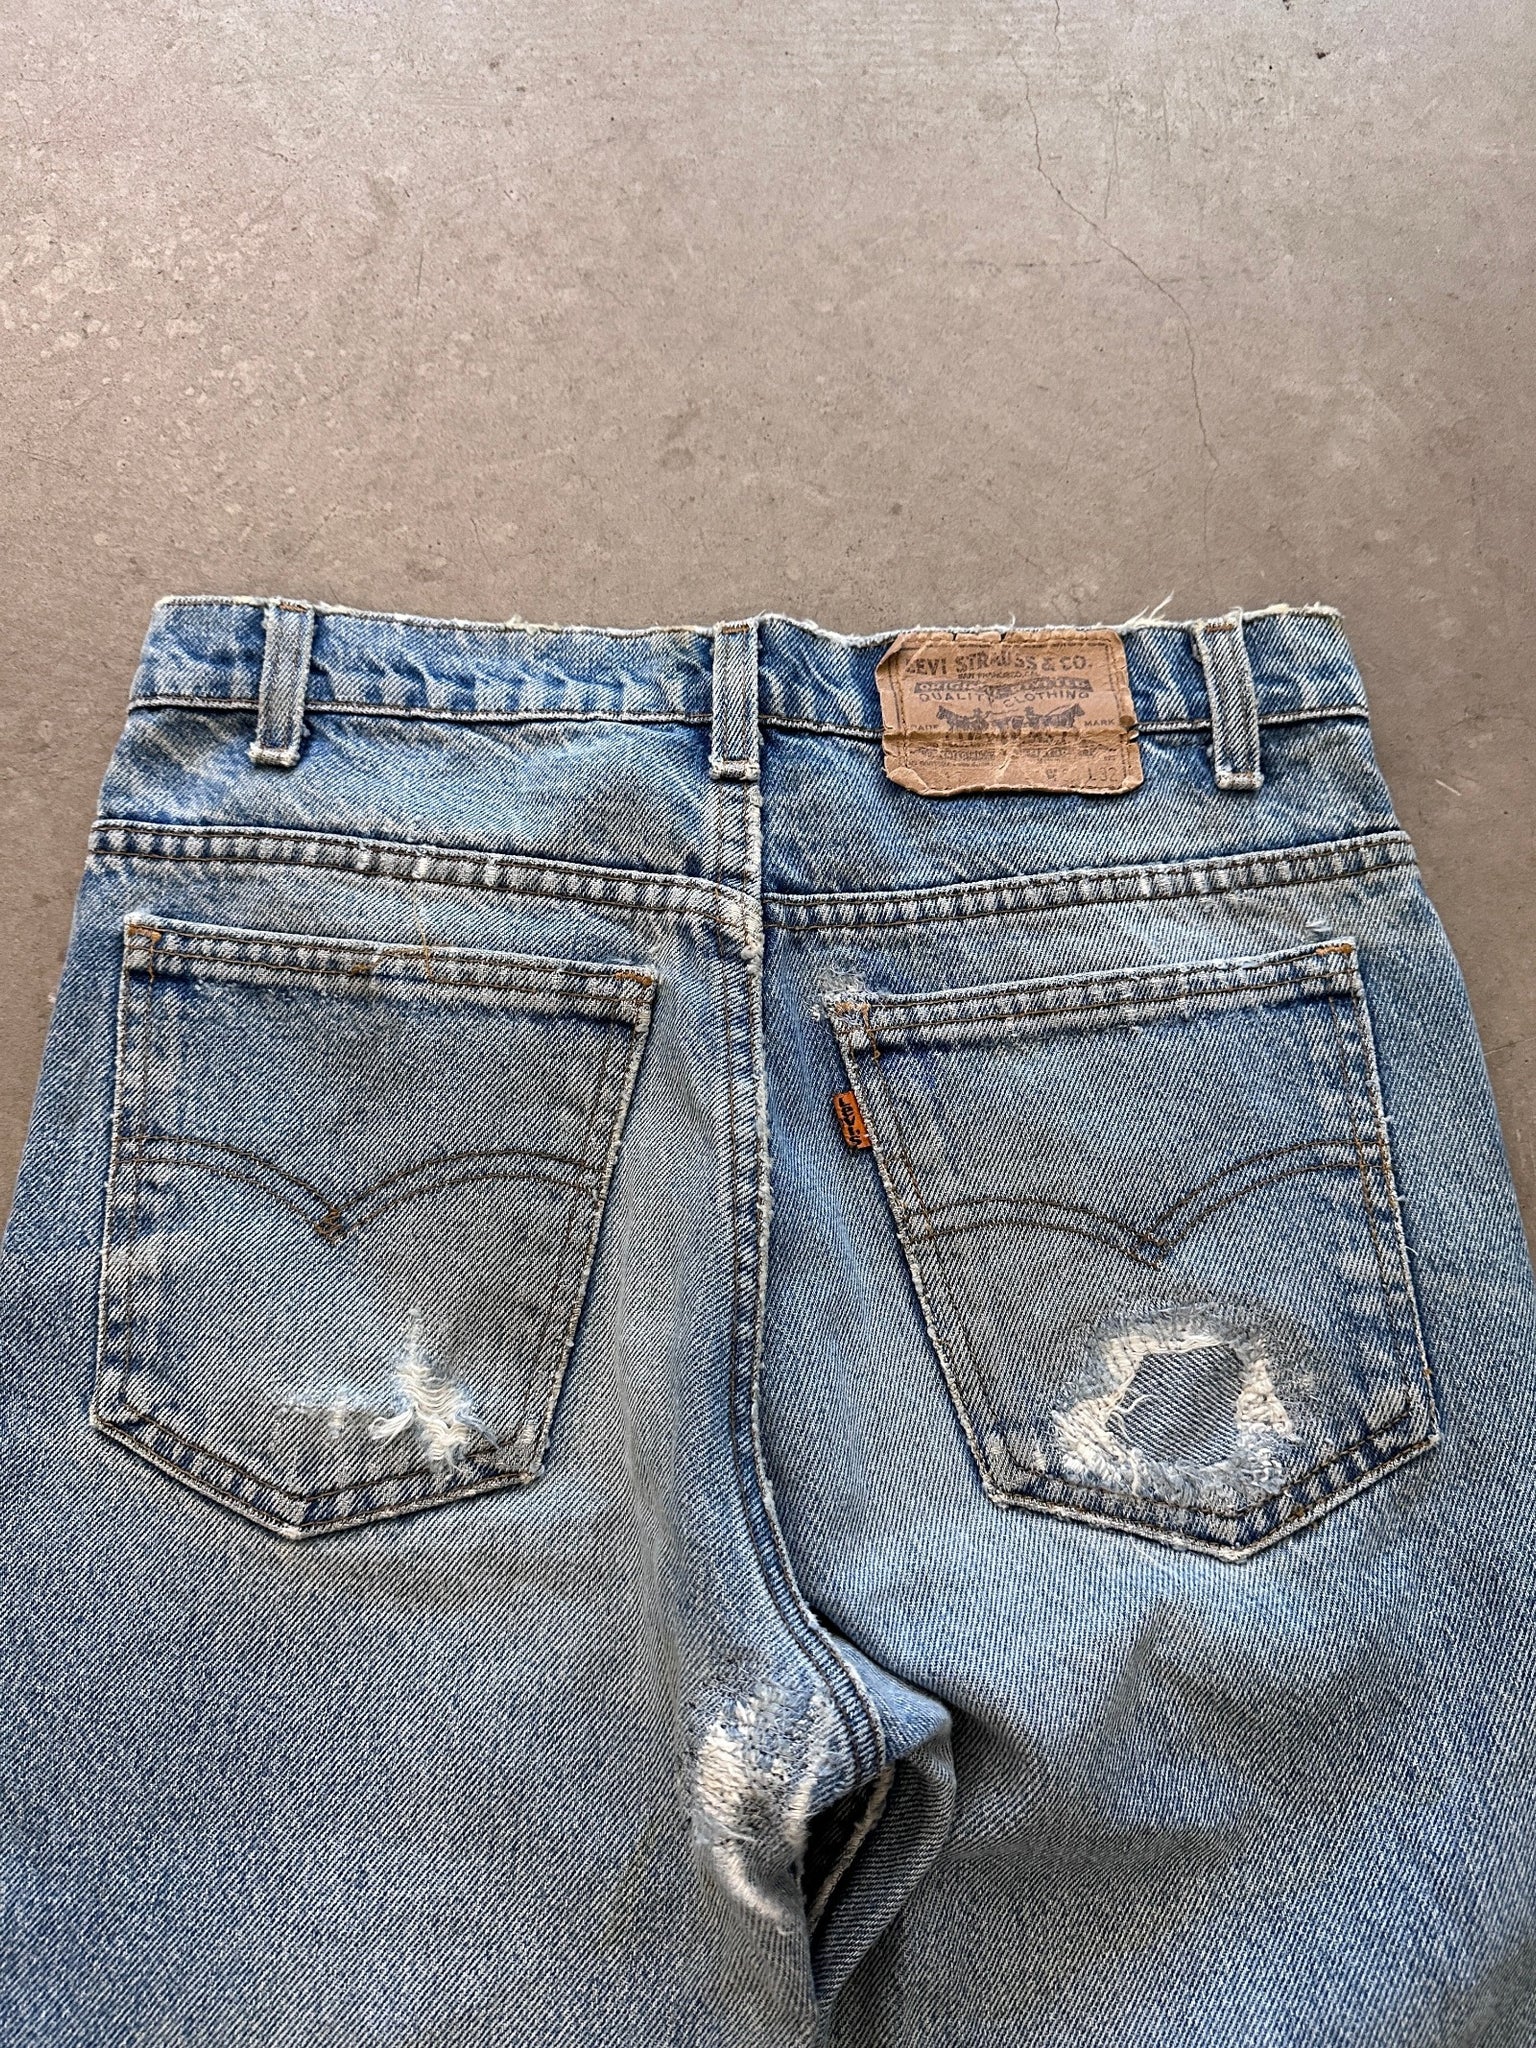 1980's Levi's 501 Jeans - 30 x 32